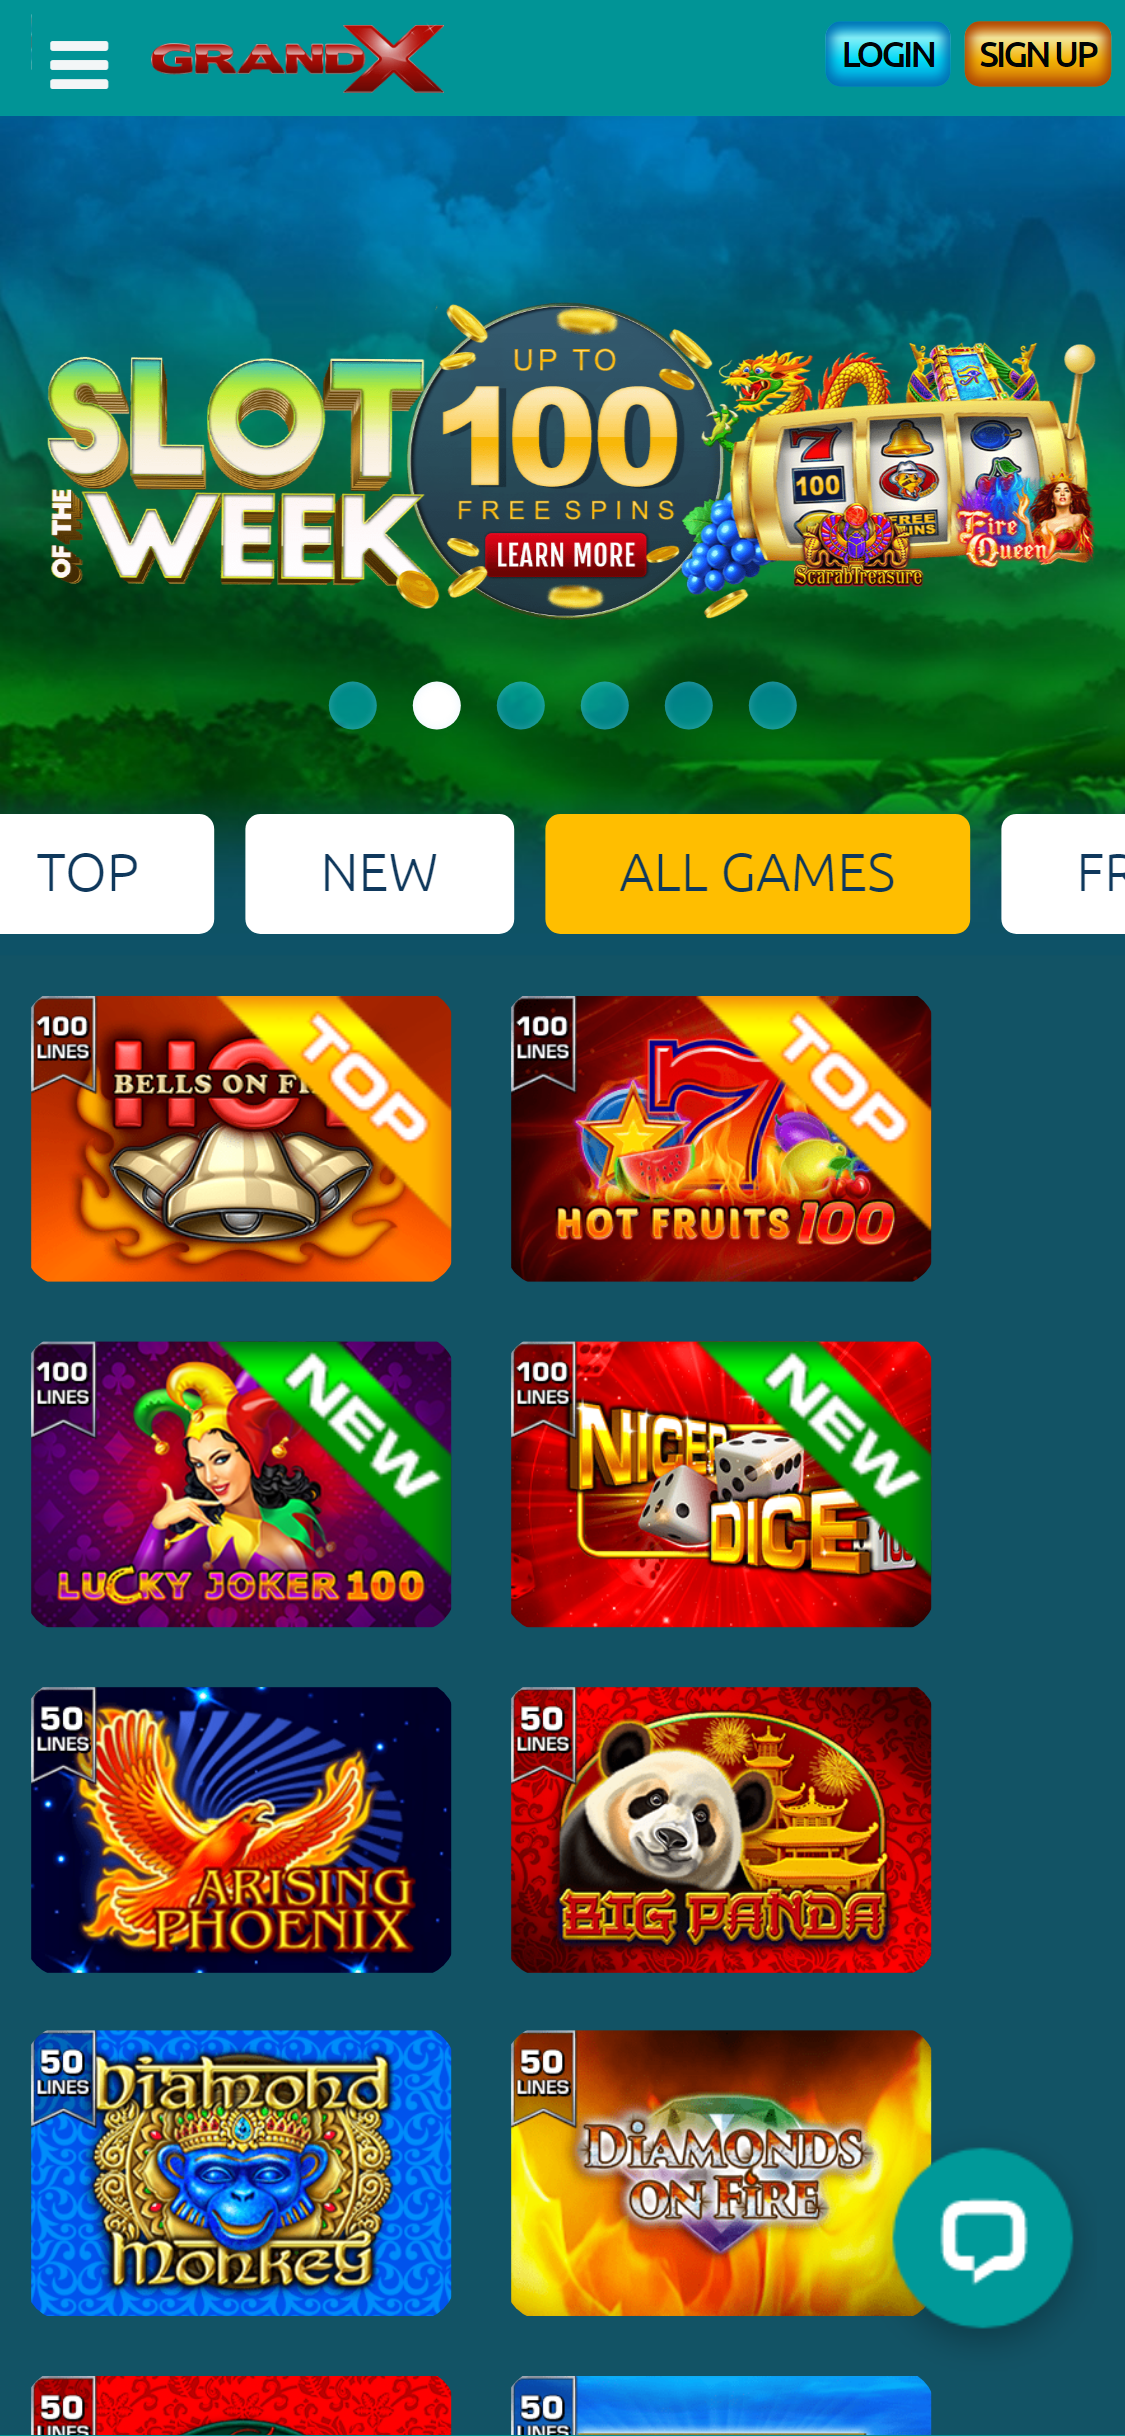 Grand X Casino Mobile Games Review